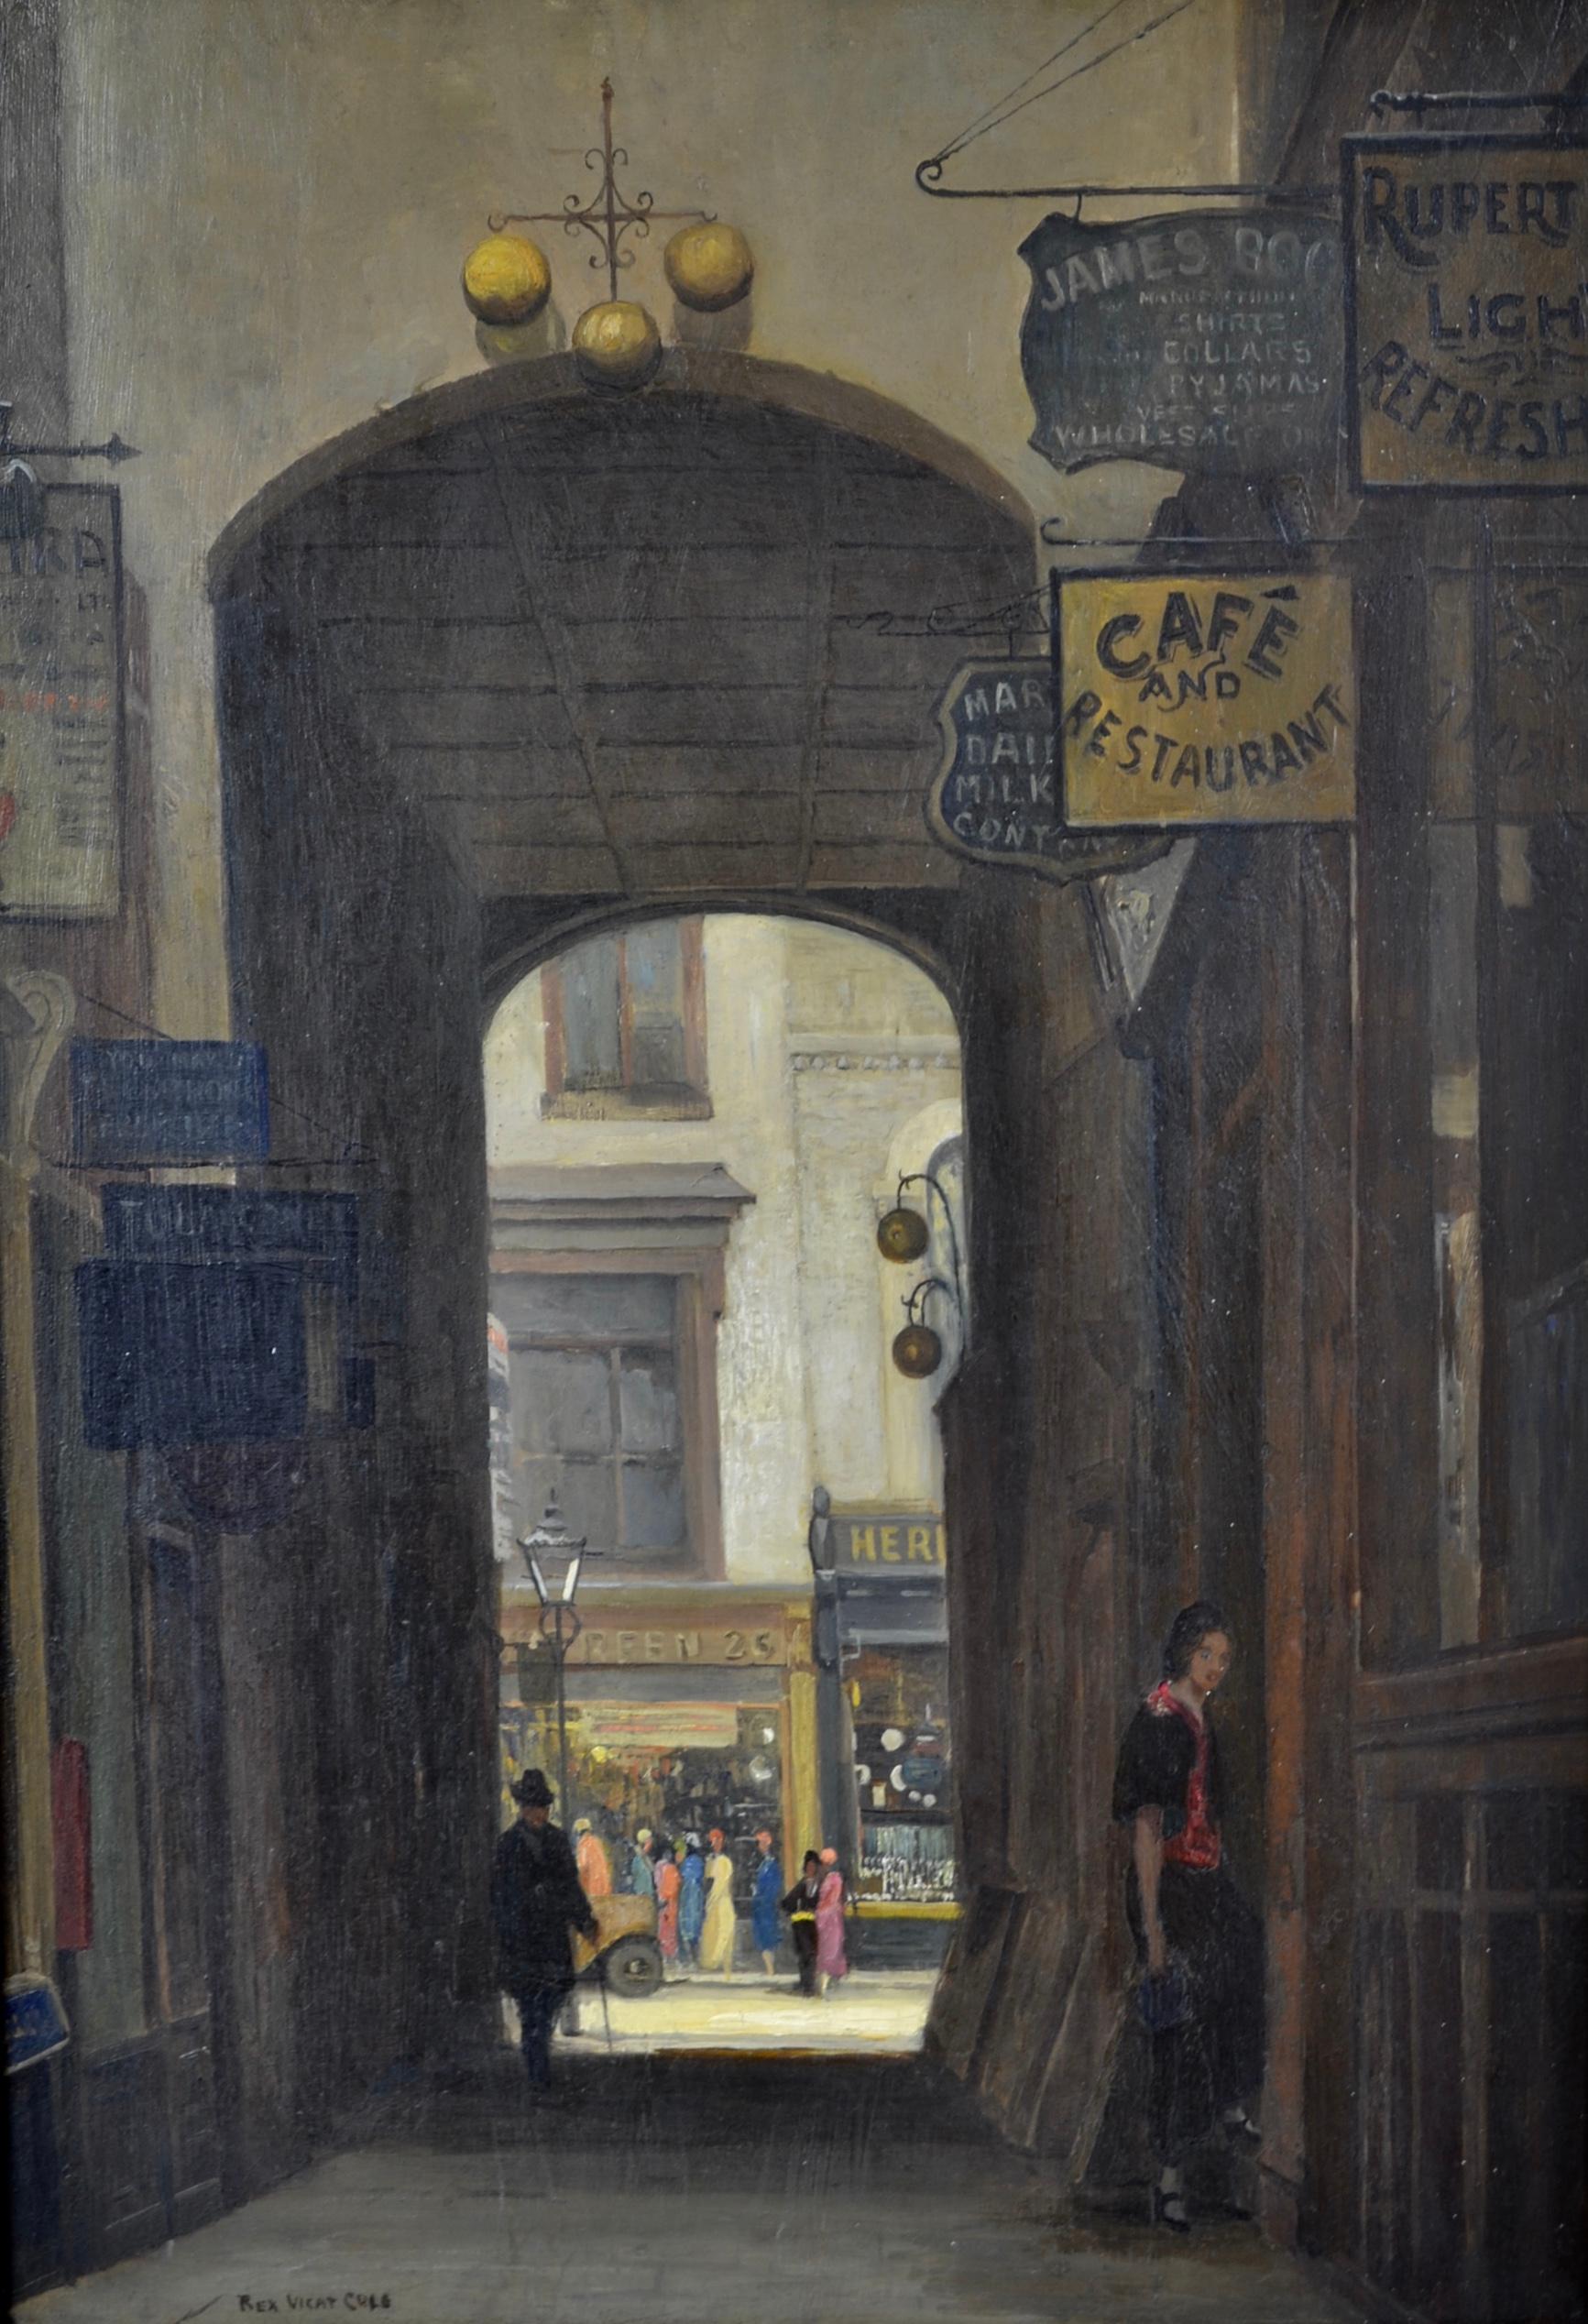 Rupert Court, Soho - 1930s London Street Scene by Rex Vicat Cole